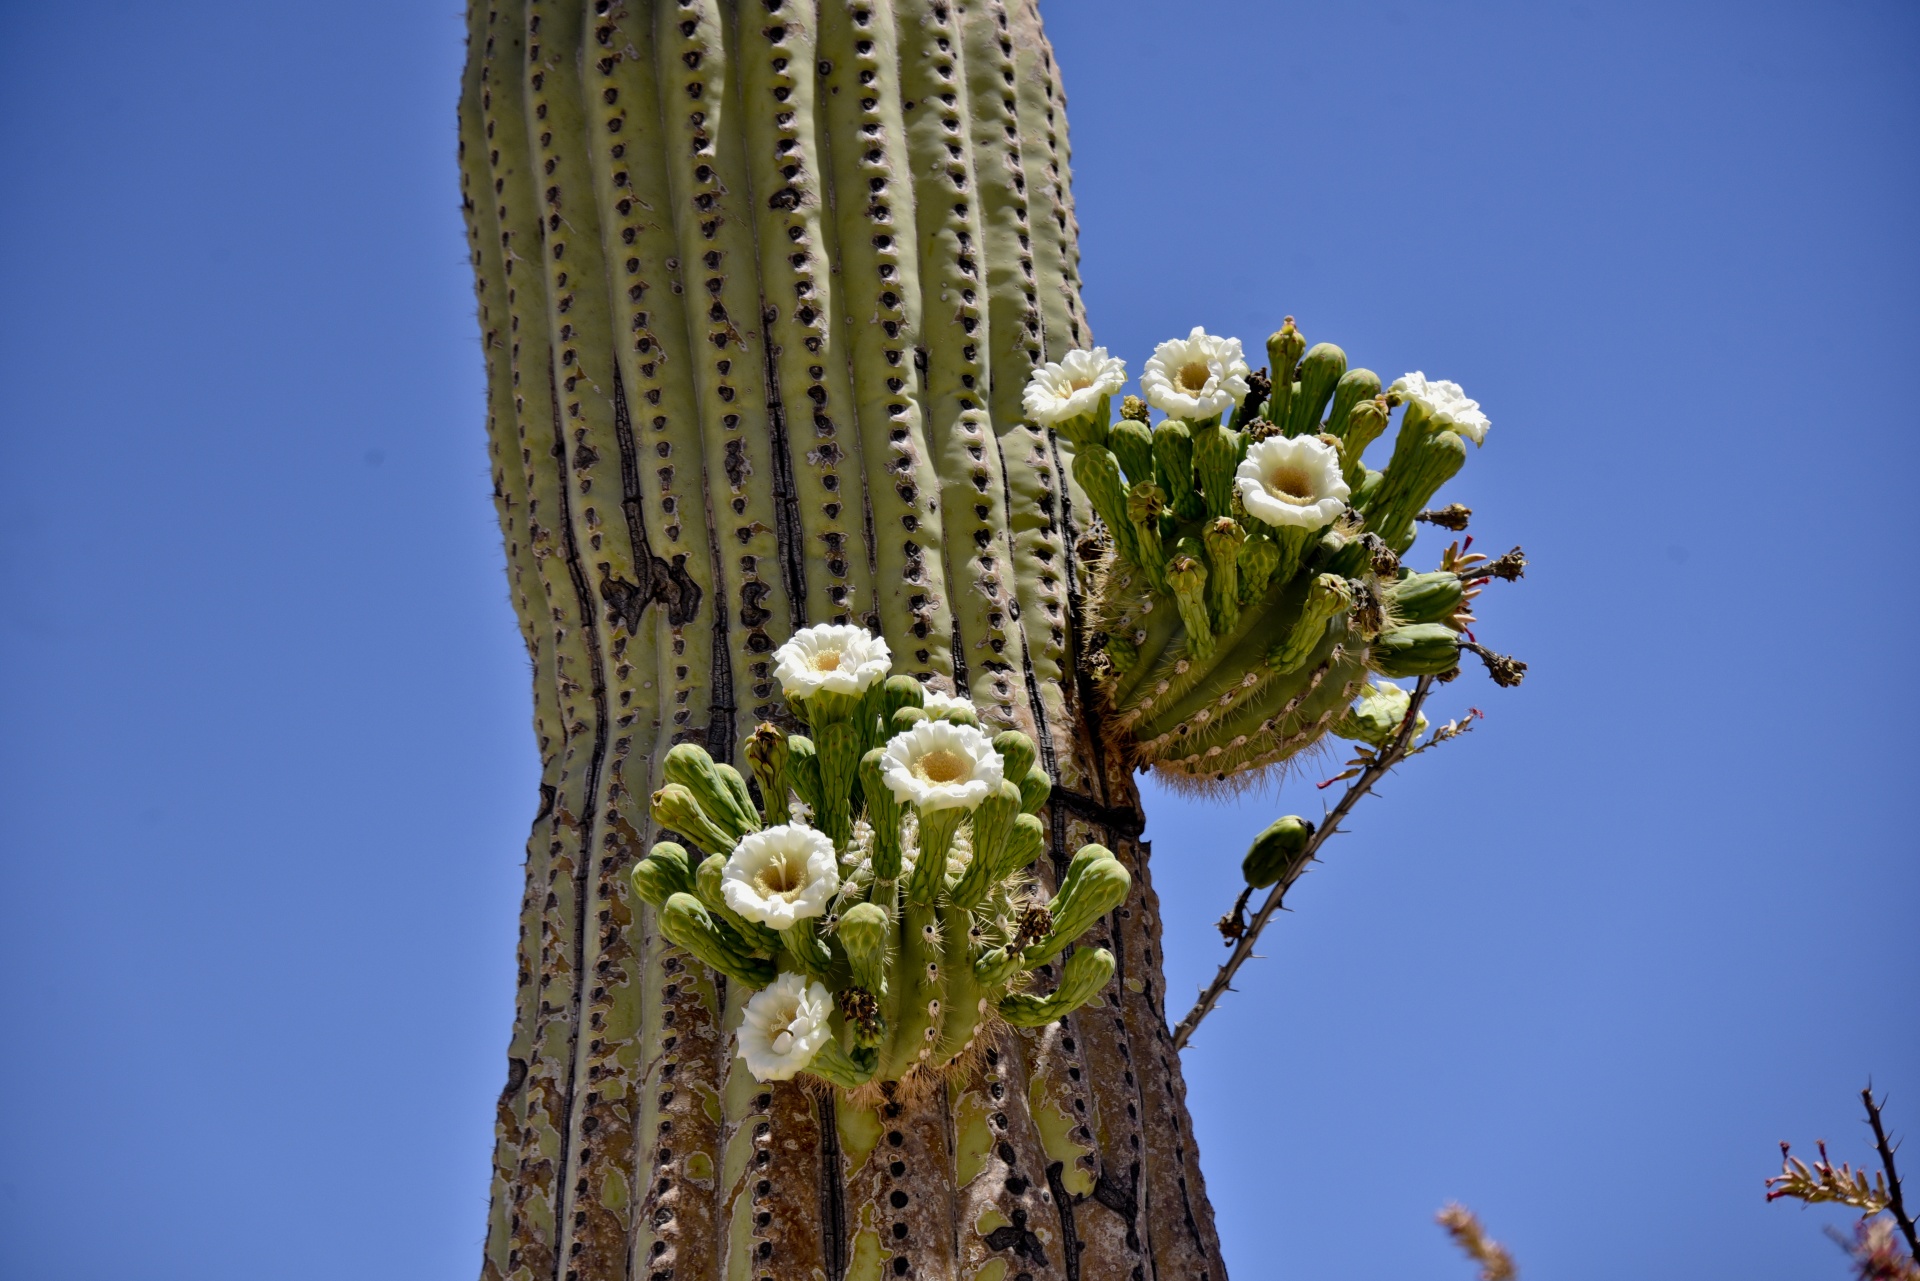 Arizona Saguaro cactus flowers